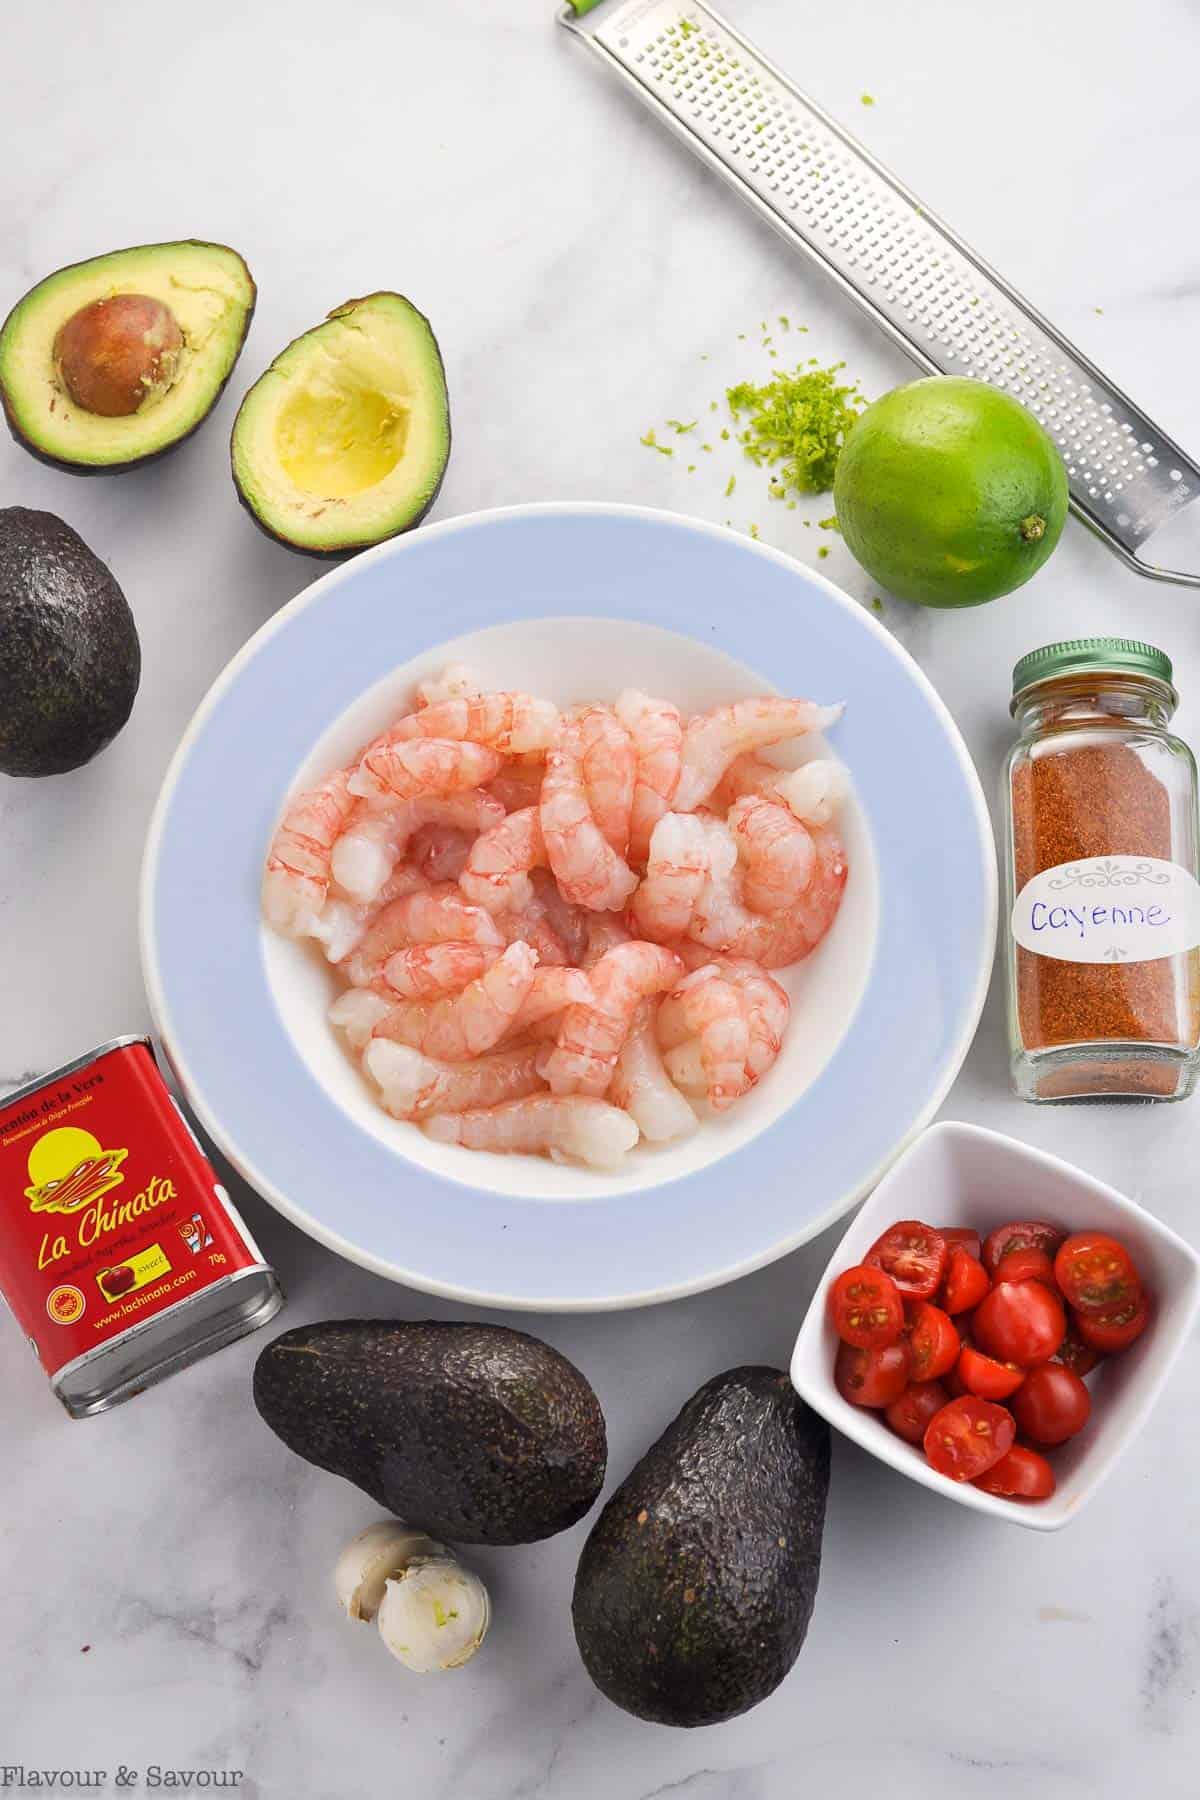 Ingredients for Cajun Shrimp Stuffed Avocados